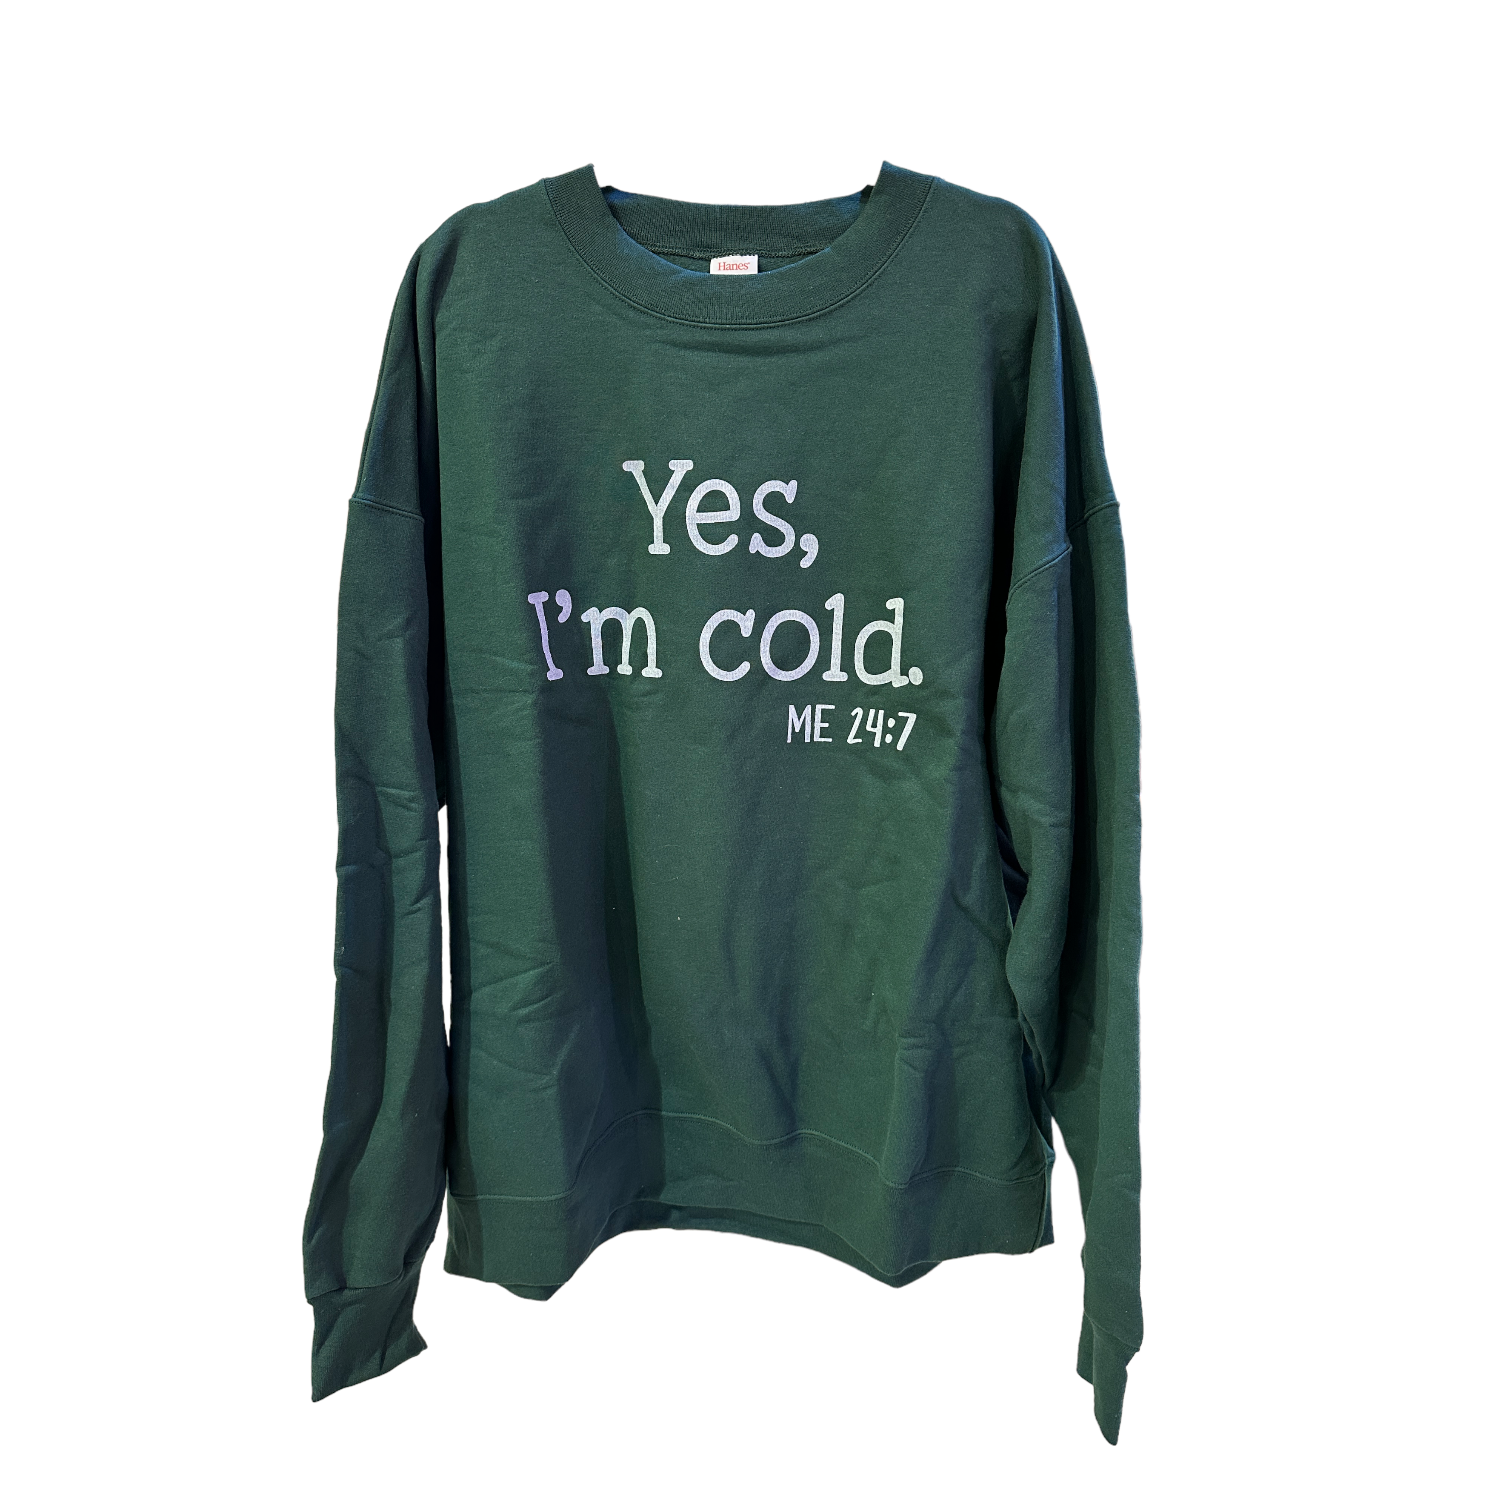 Yes, I'm Cold. Me 24:7 - Sweatshirt - Mellow Monkey